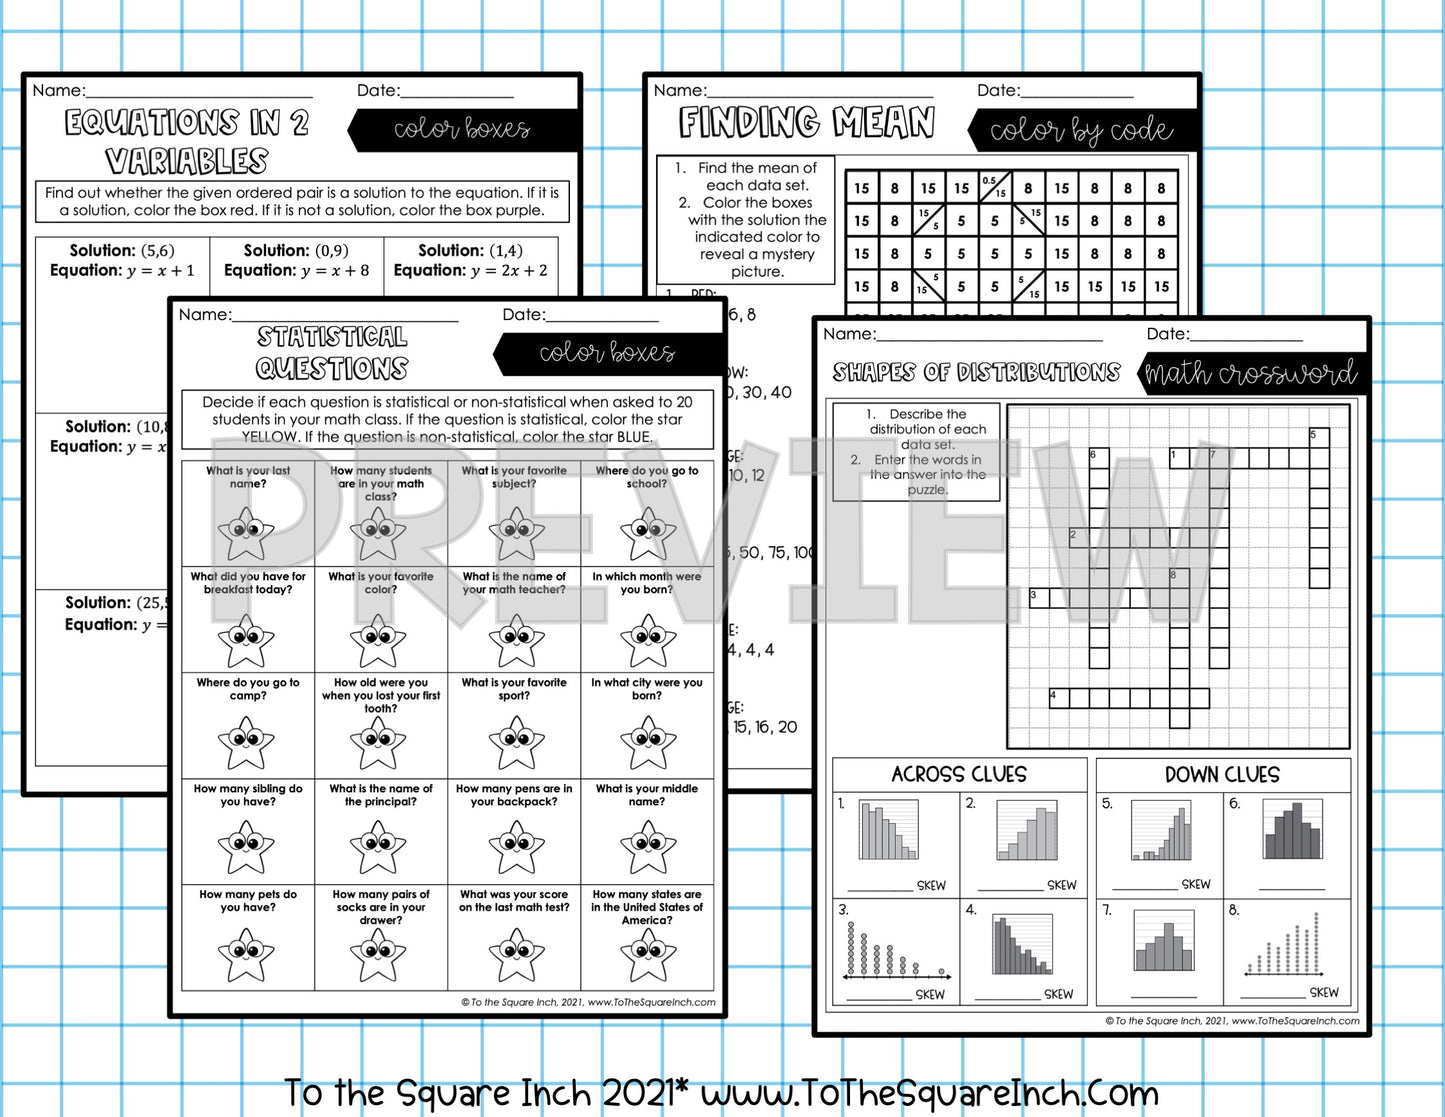 6th Grade Math FUN Worksheets